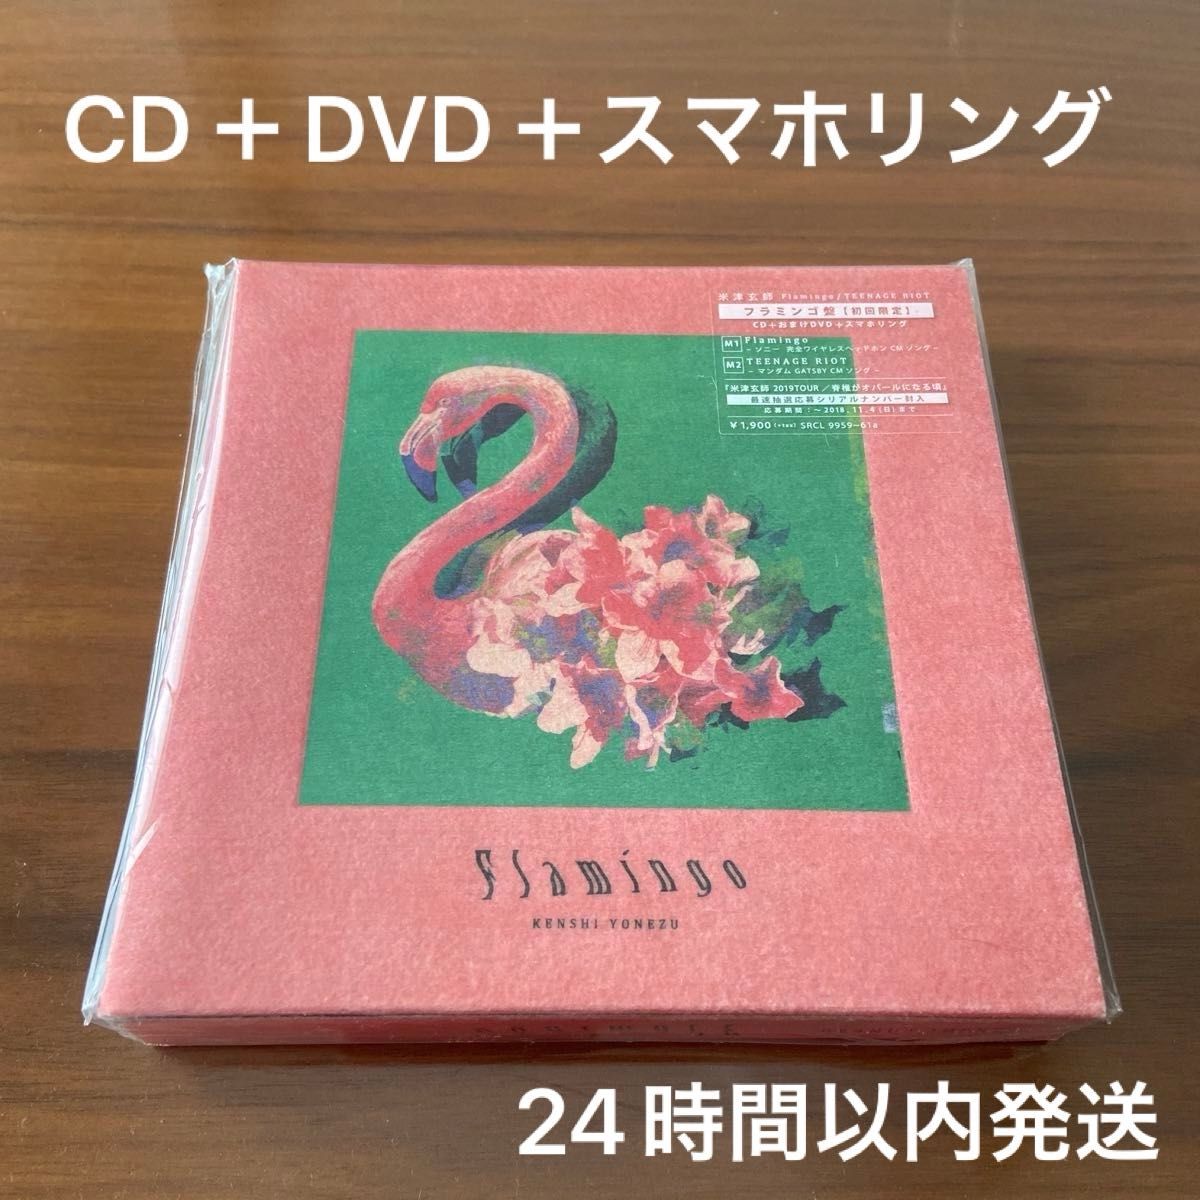 Flamingo / TEENAGE RIOT フラミンゴ盤 米津玄師 初回限定盤 DVD スマホリング付